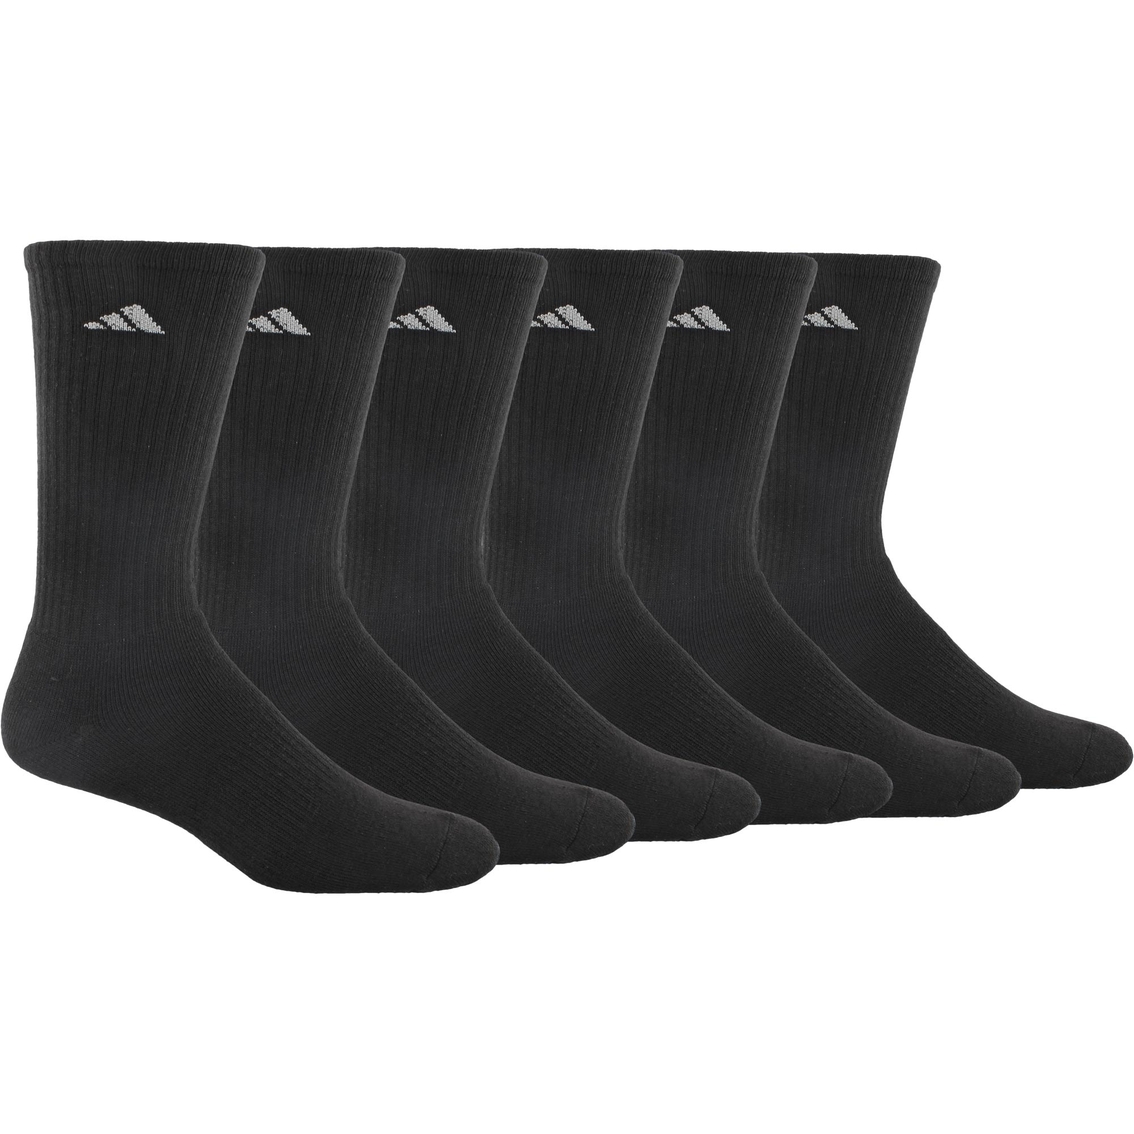 Adidas Athletic Crew Socks 6 Pk. | Socks | Clothing & Accessories ...